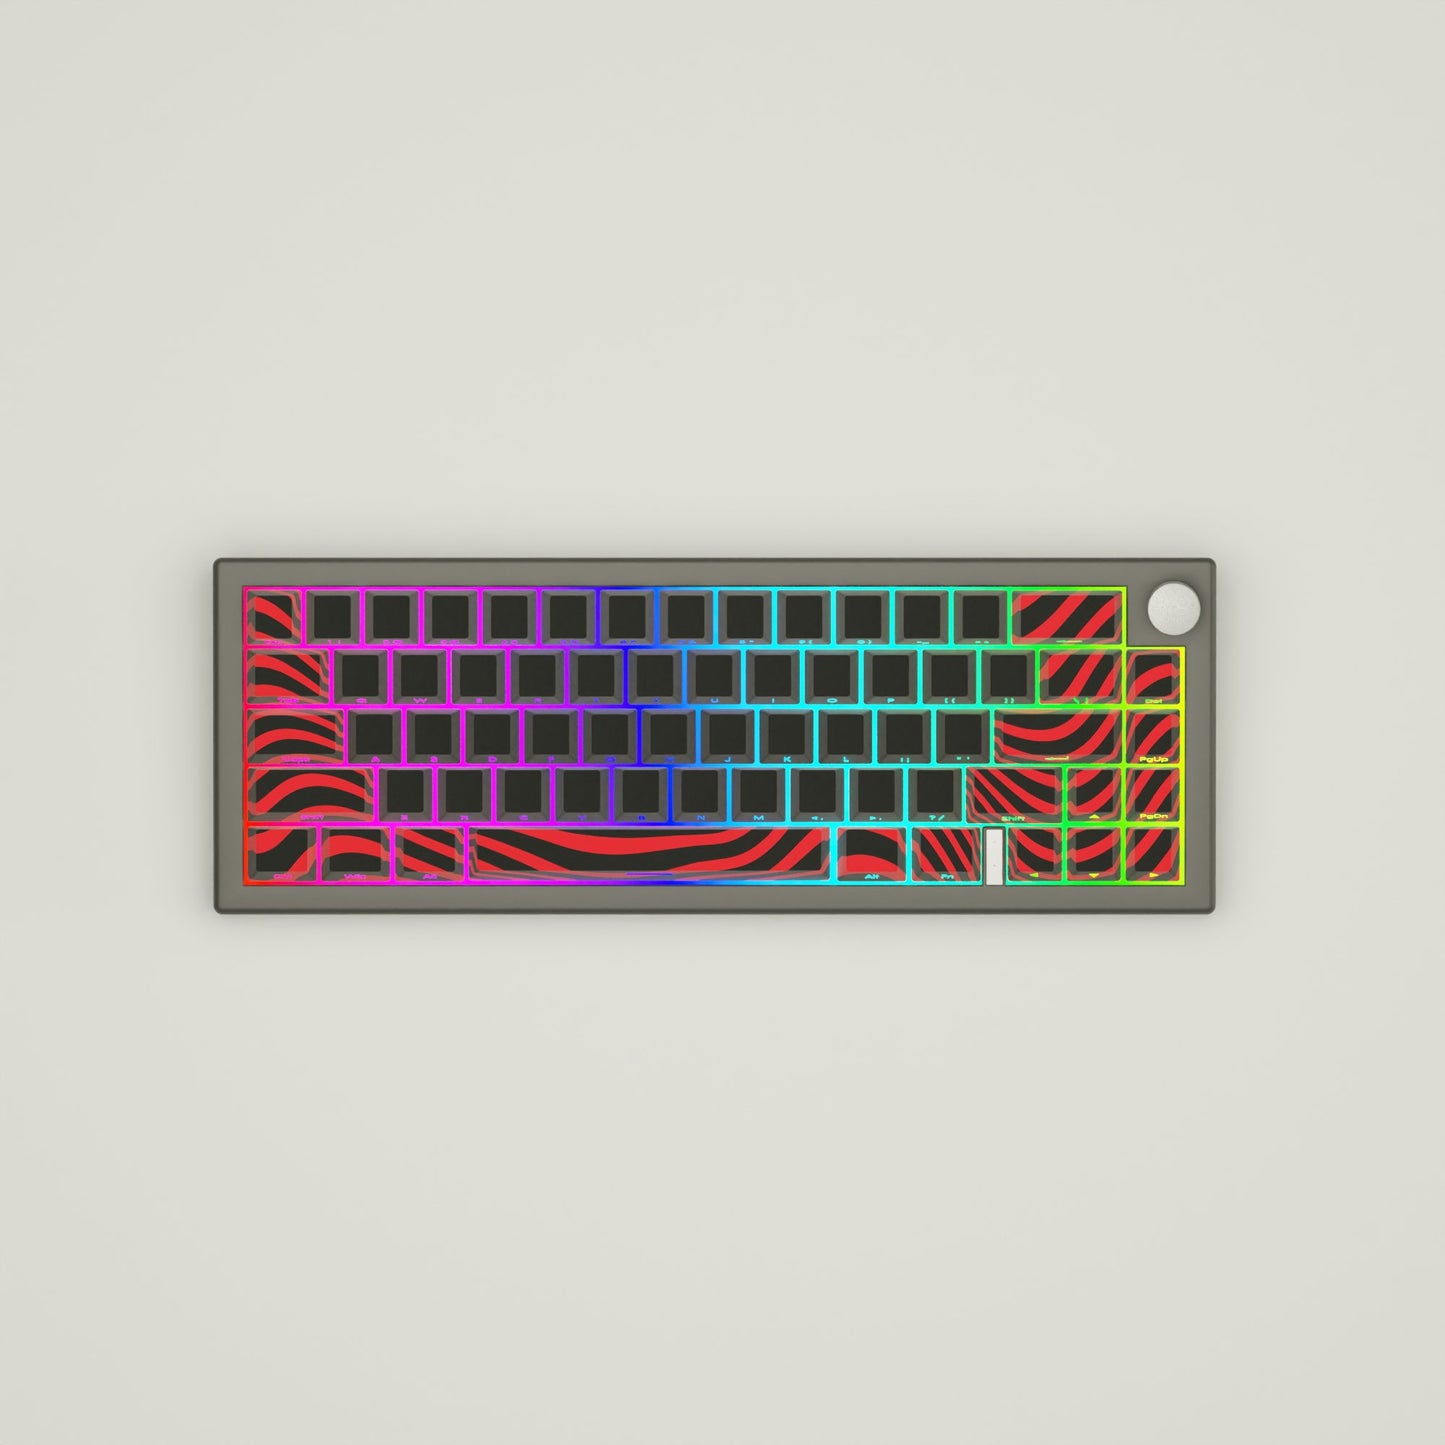 Illusion GMK67 Keyboard(65% Mechanical Keyboard with knob) - Goblintechkeys